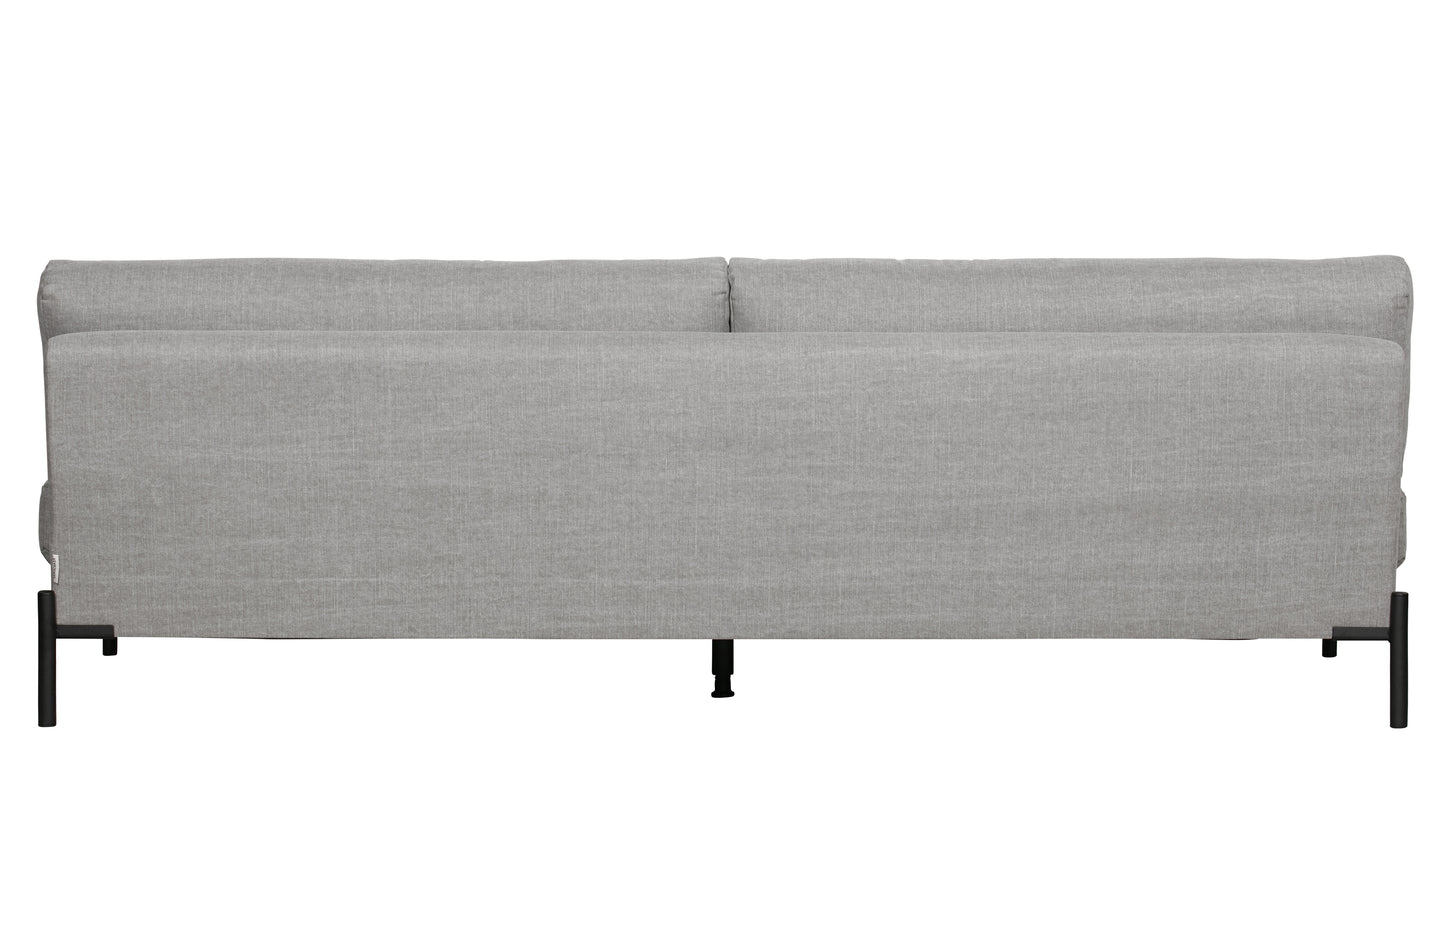 die vtwon | Sleeve - 3-Personen-Sofa, Vintage Light Grey